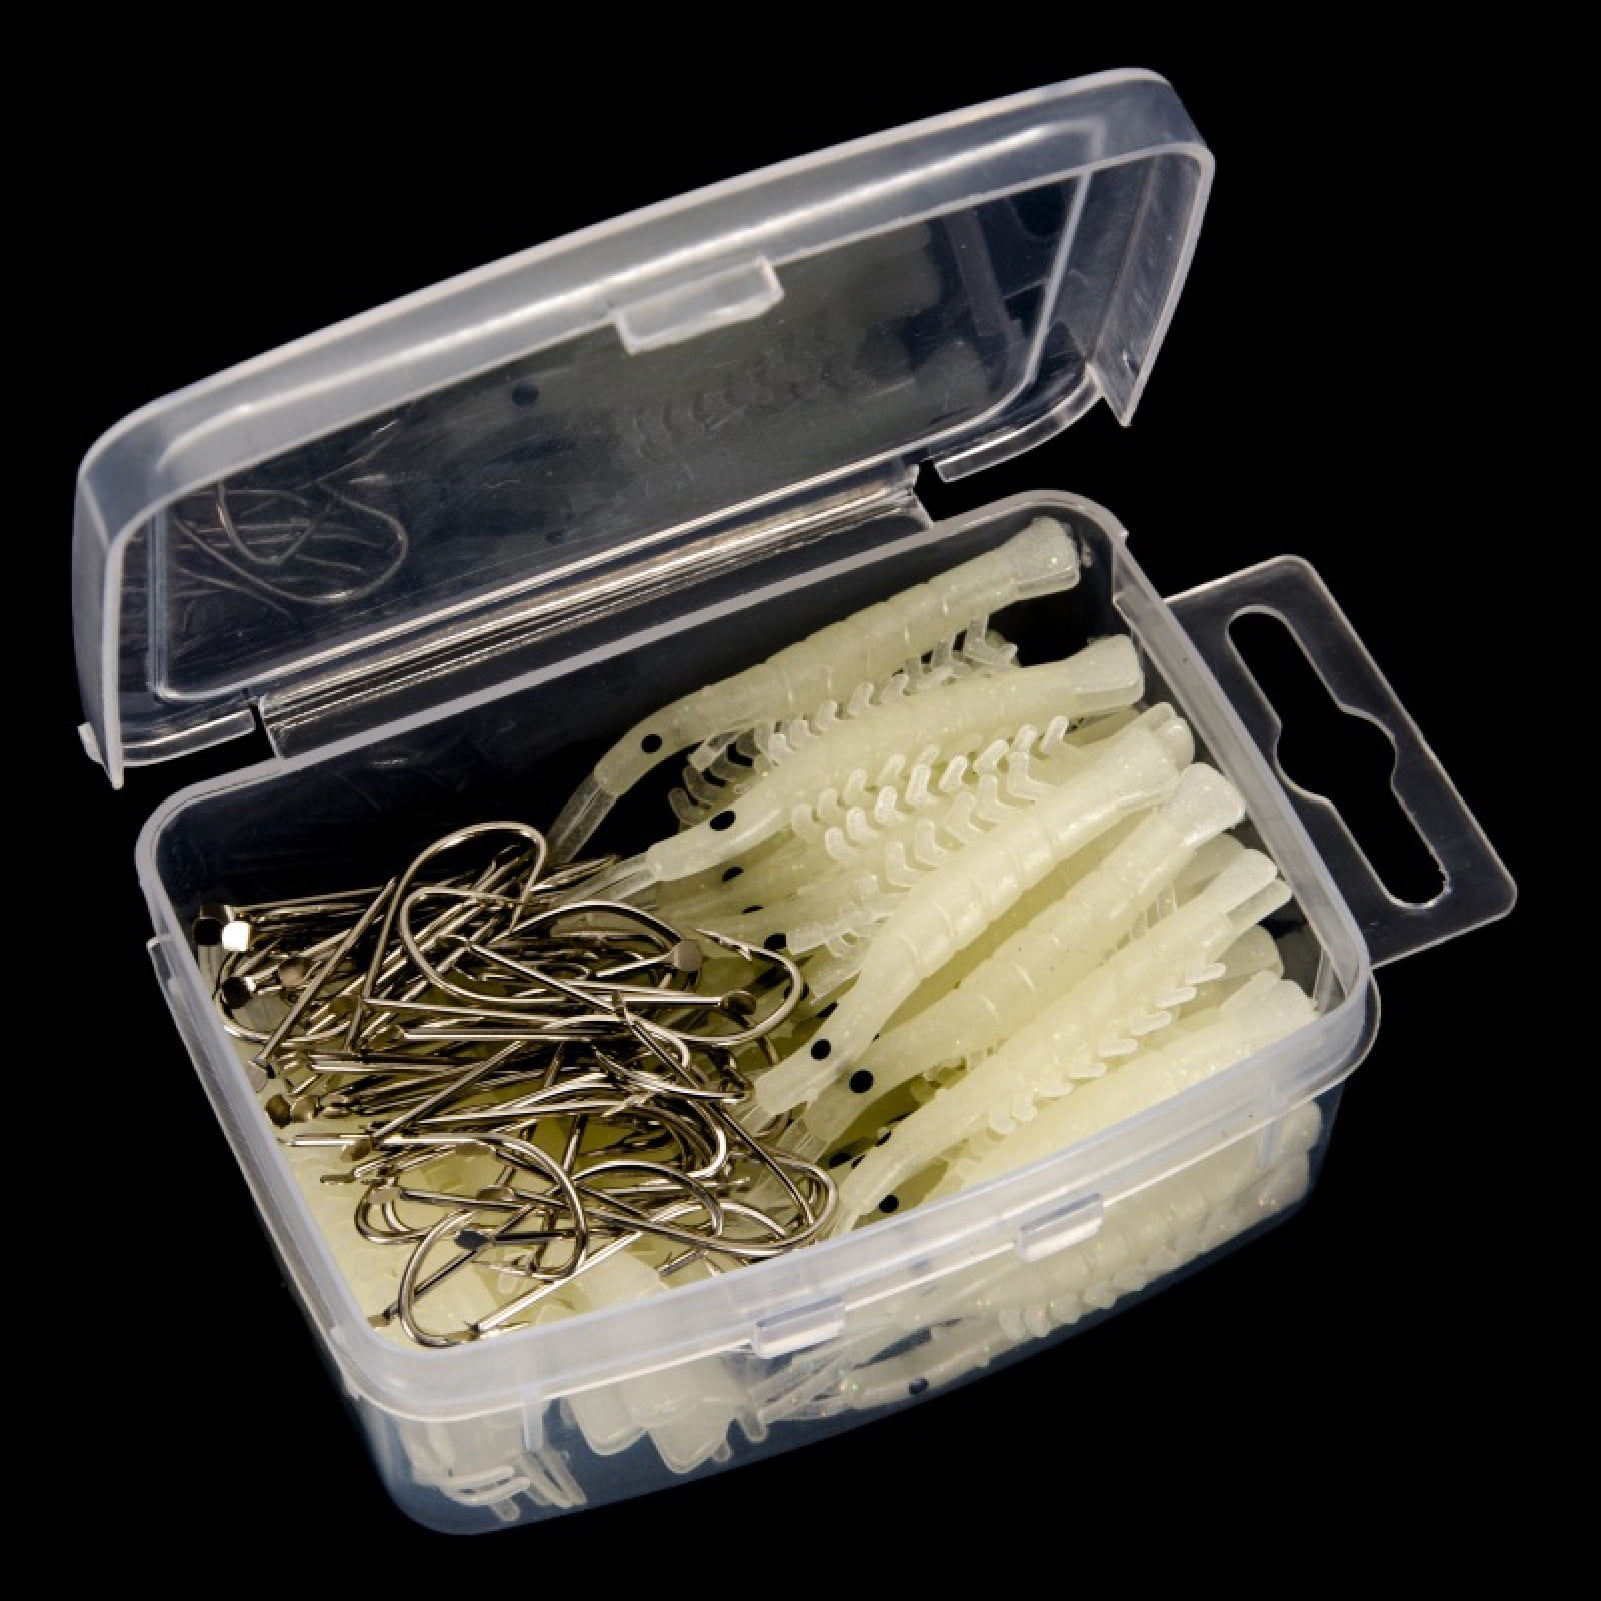 100Pcs/Set Fake Shrimp-Shaped Lure with Sharp Hook Soft Bionic